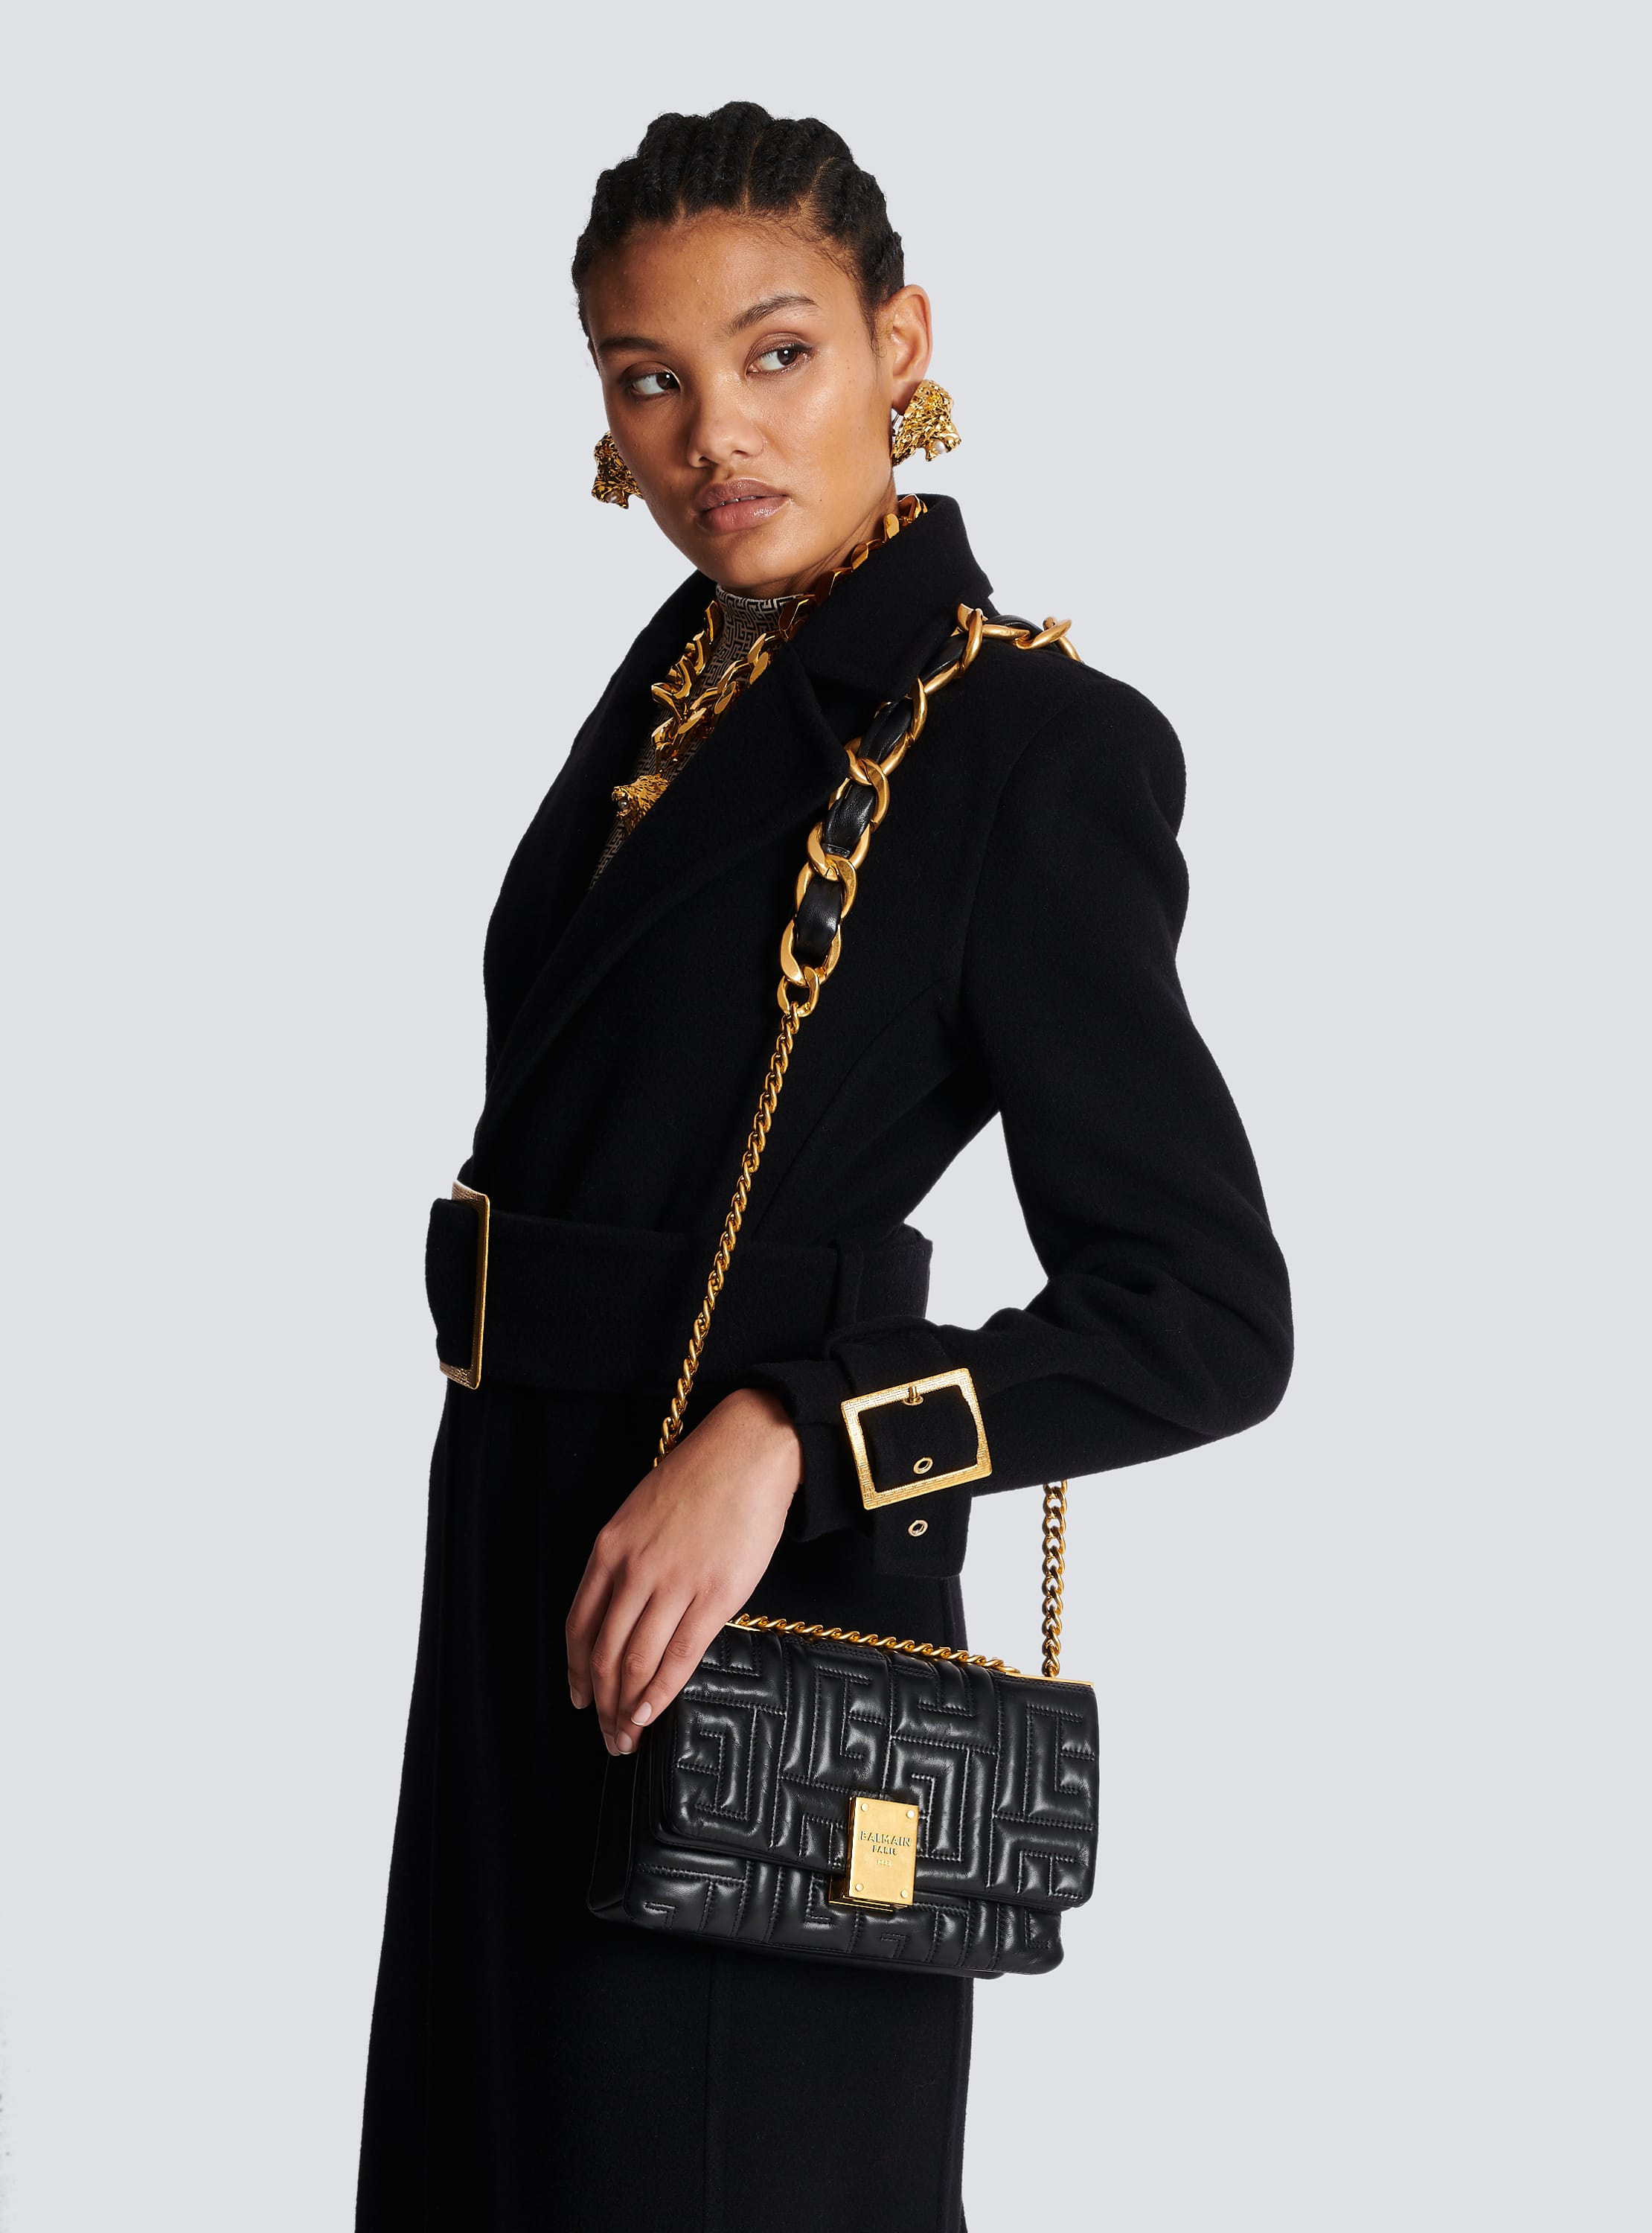 Black Soft Small Leather Crossbody Bag